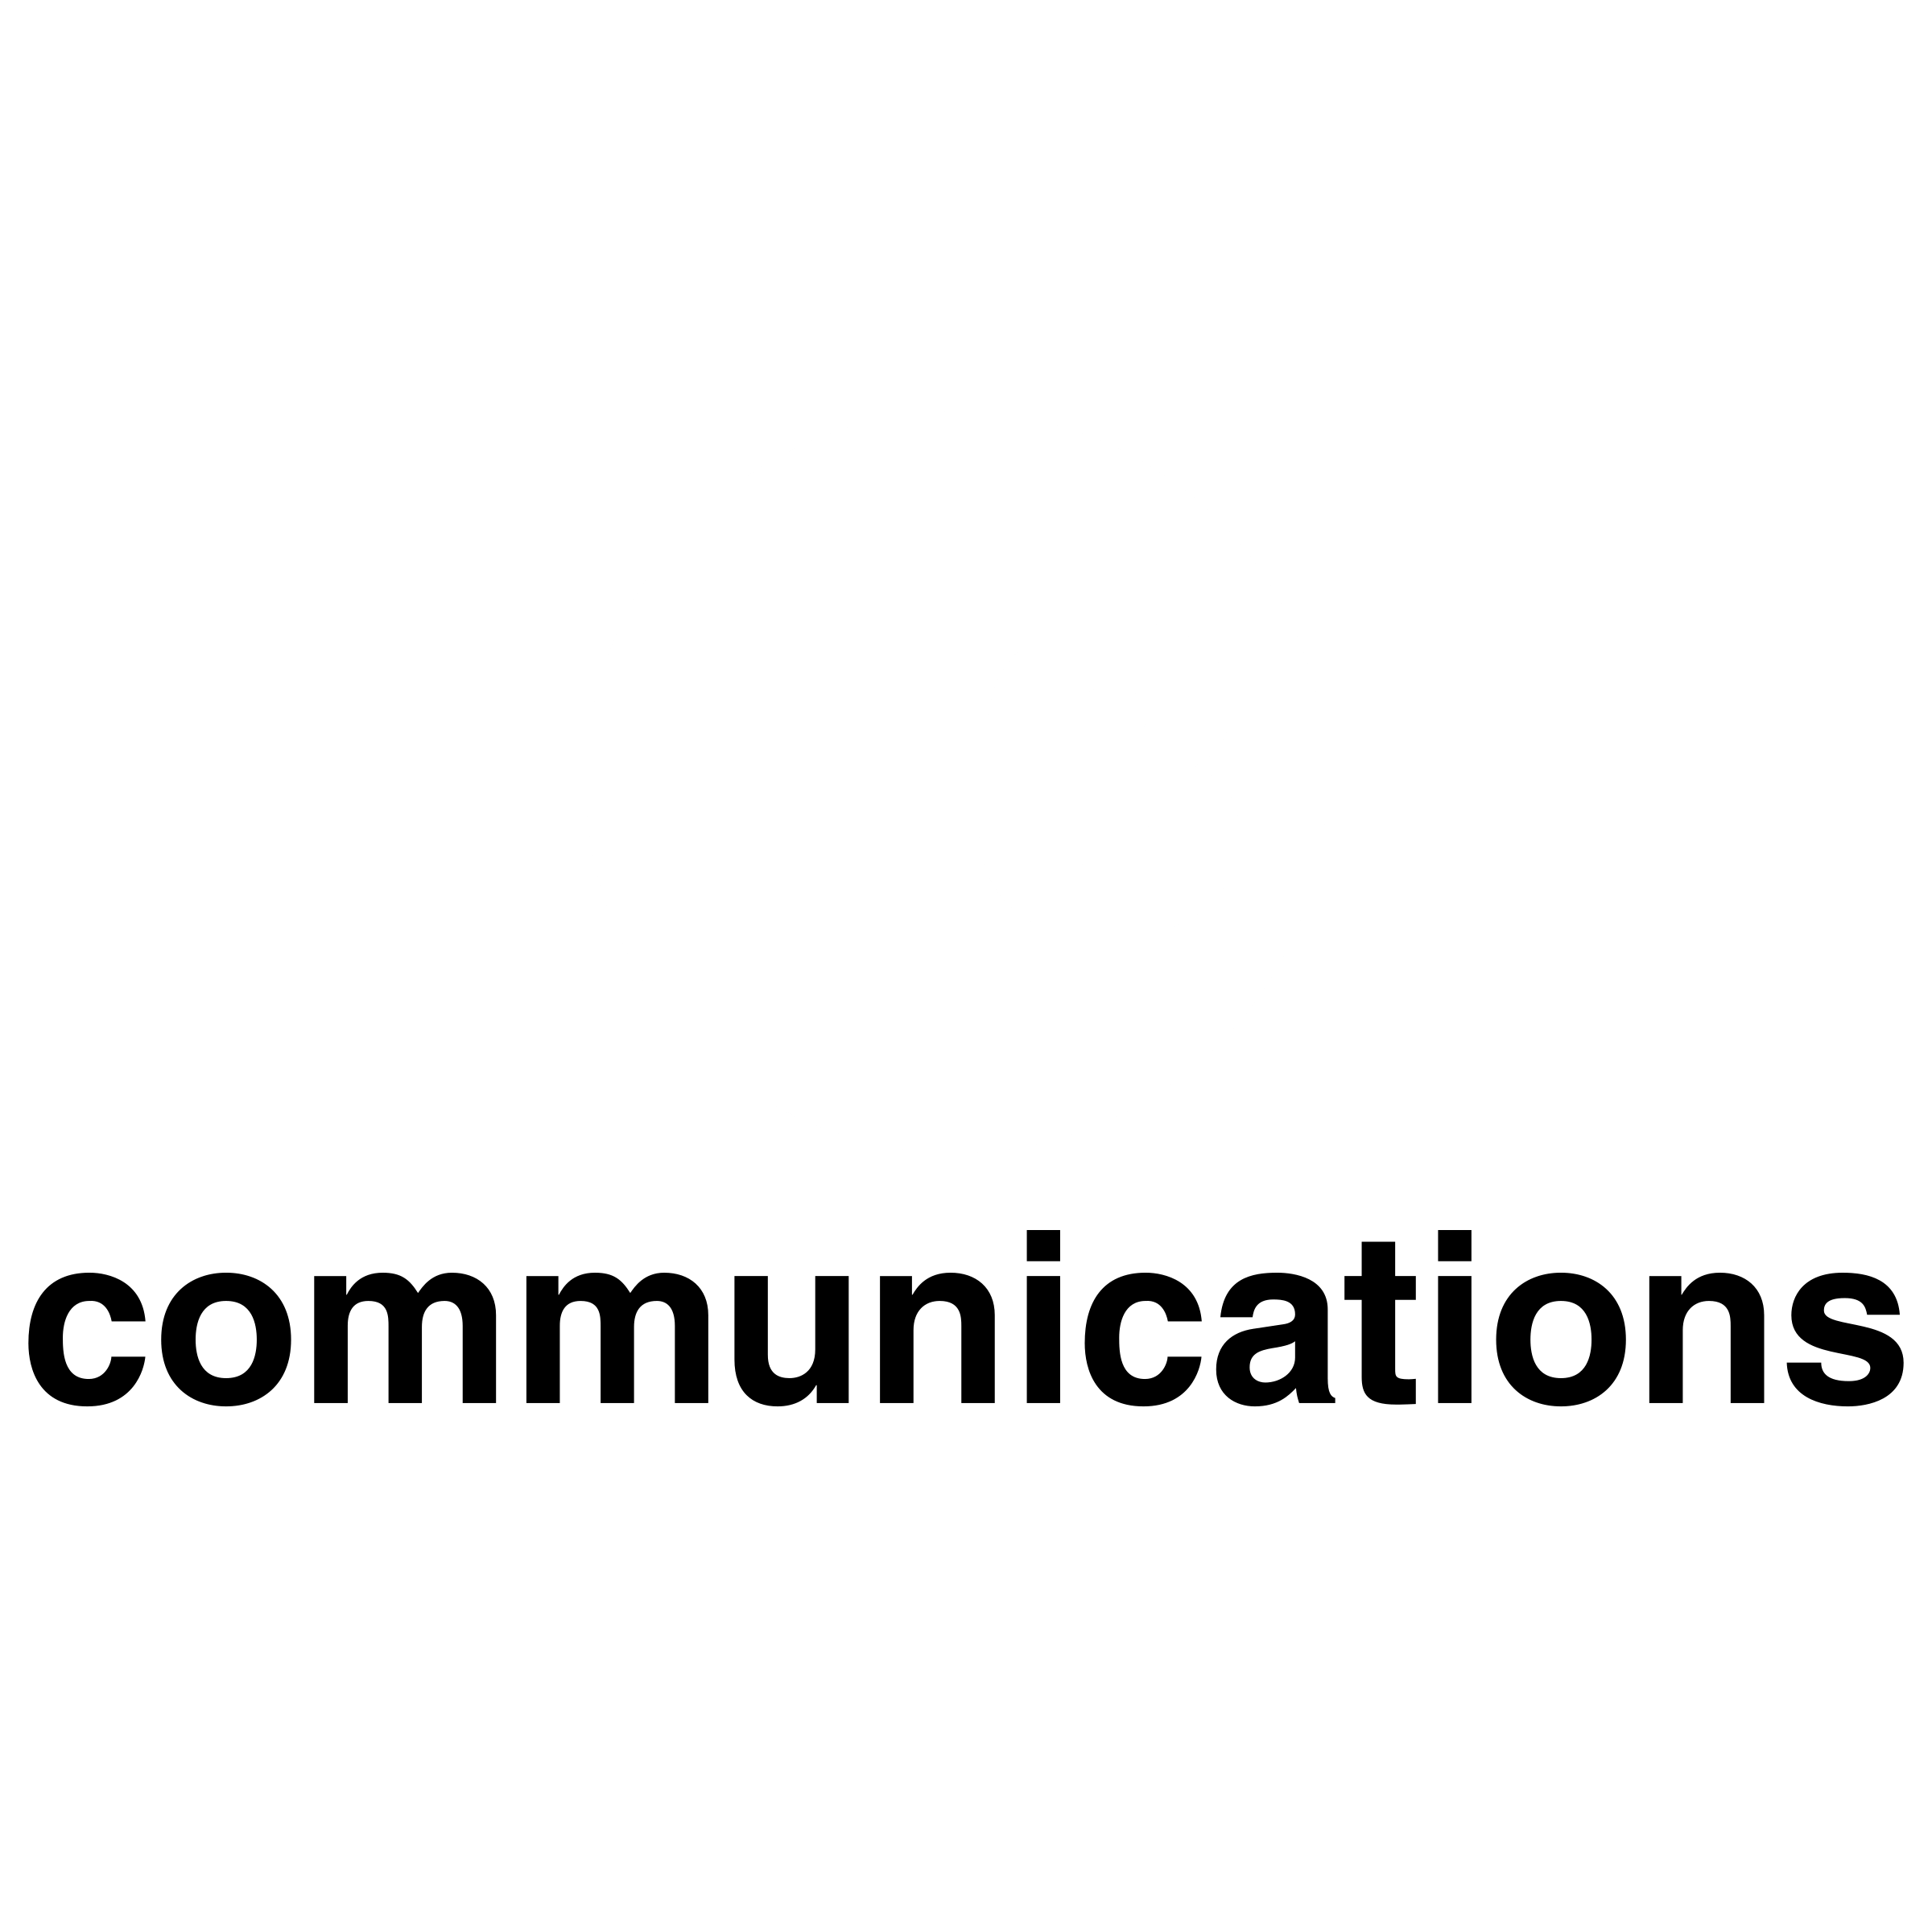 L-3 Communications Logo - L 3 Communications Logo PNG Transparent & SVG Vector